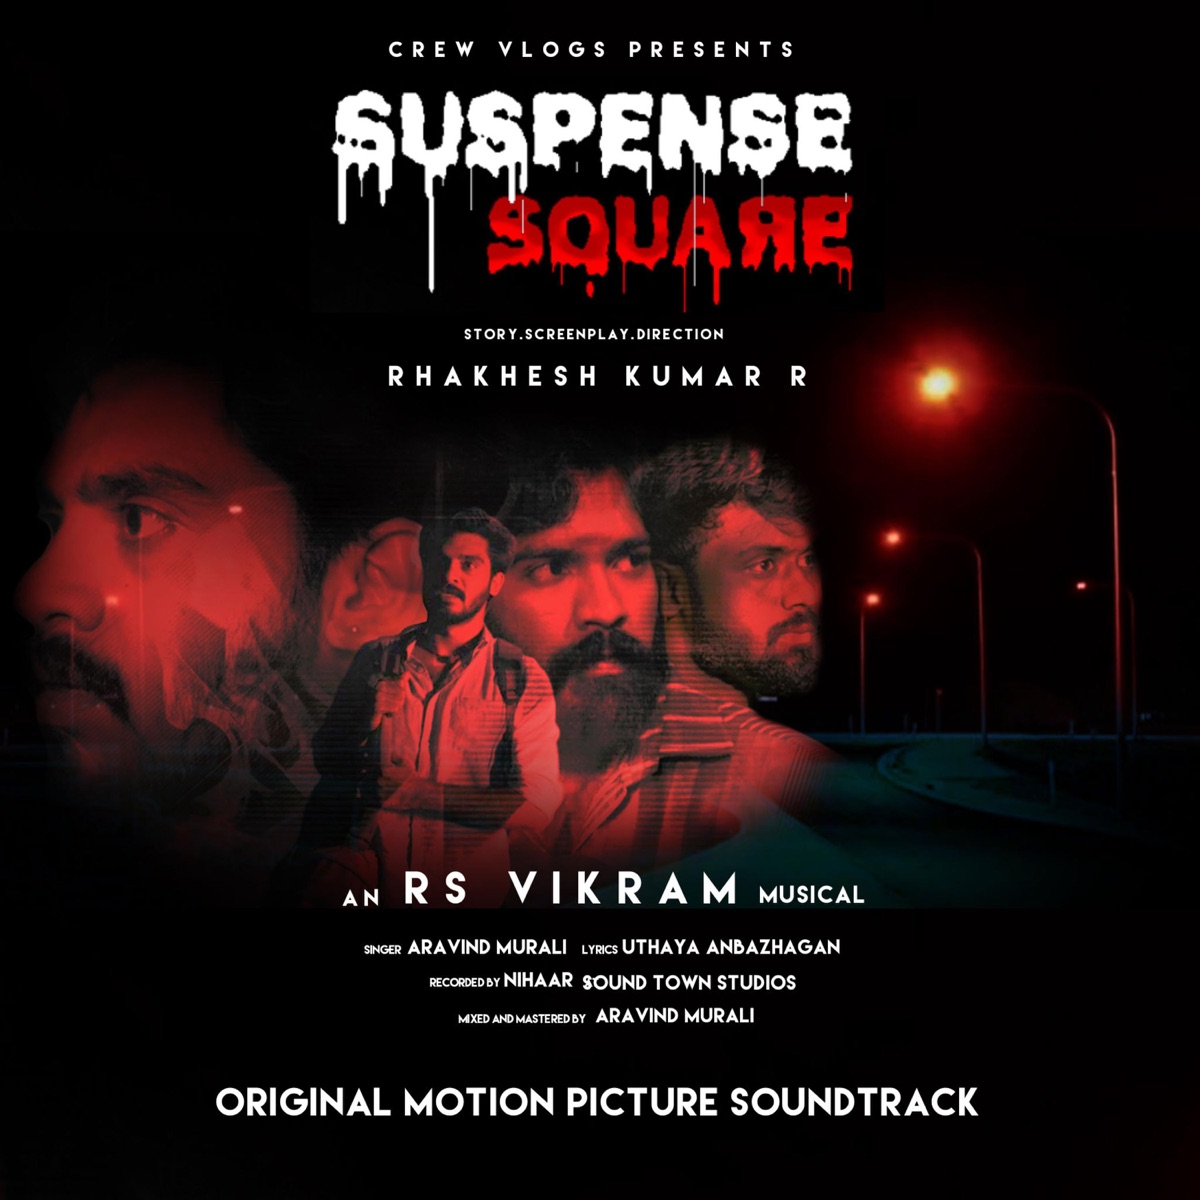 Suspense Square (Original Motion Picture Soundtrack) - Album by RS Vikram -  Apple Music